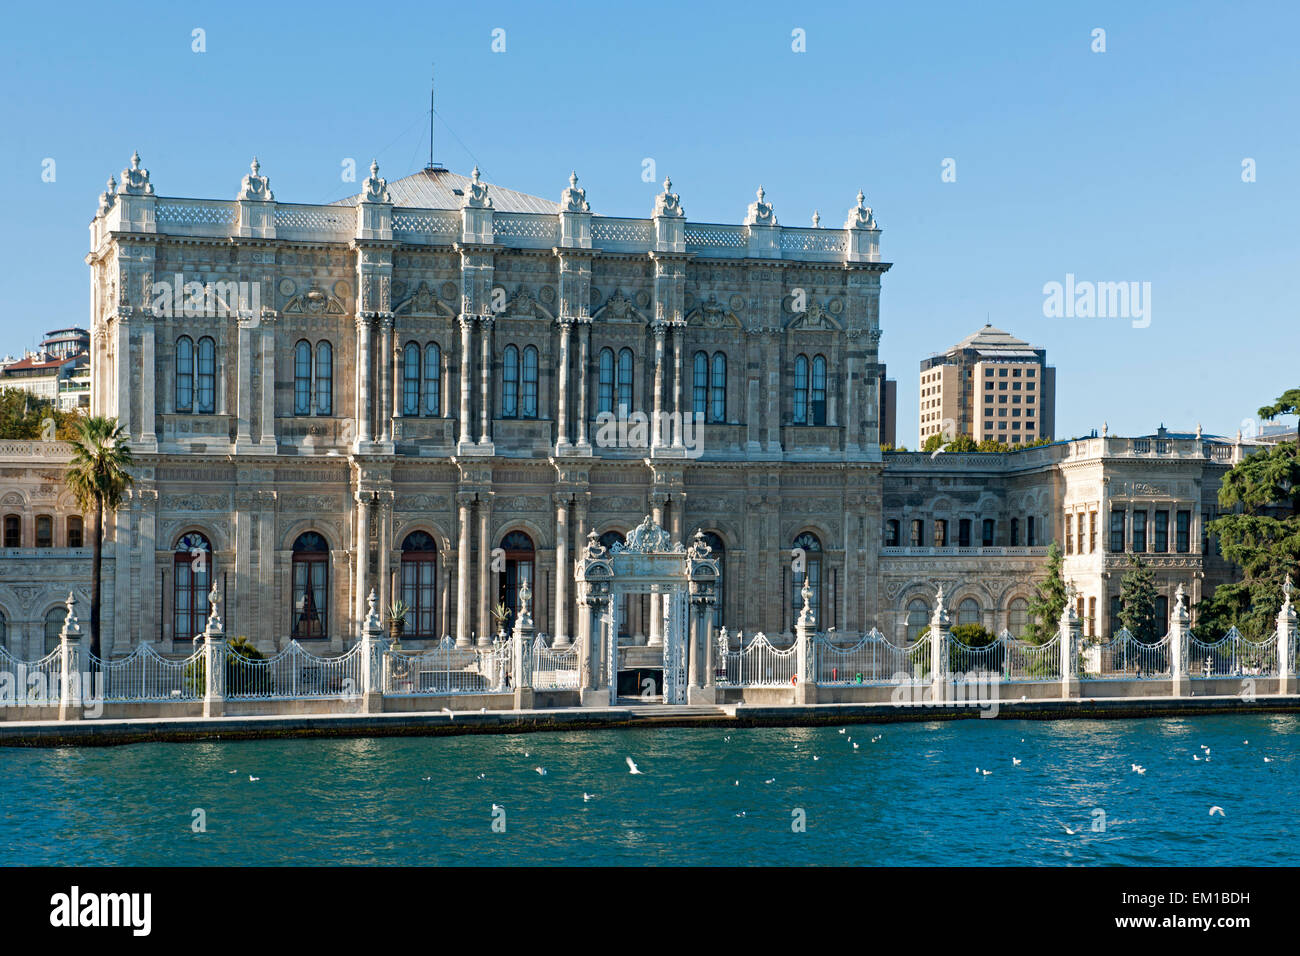 Türkei, Estambul, Besiktas, der Oder Dolmabahce-Palast Dolmabahce Sarayi (Palast der aufgeschütteten Gärten) liegt am europäisch Foto de stock